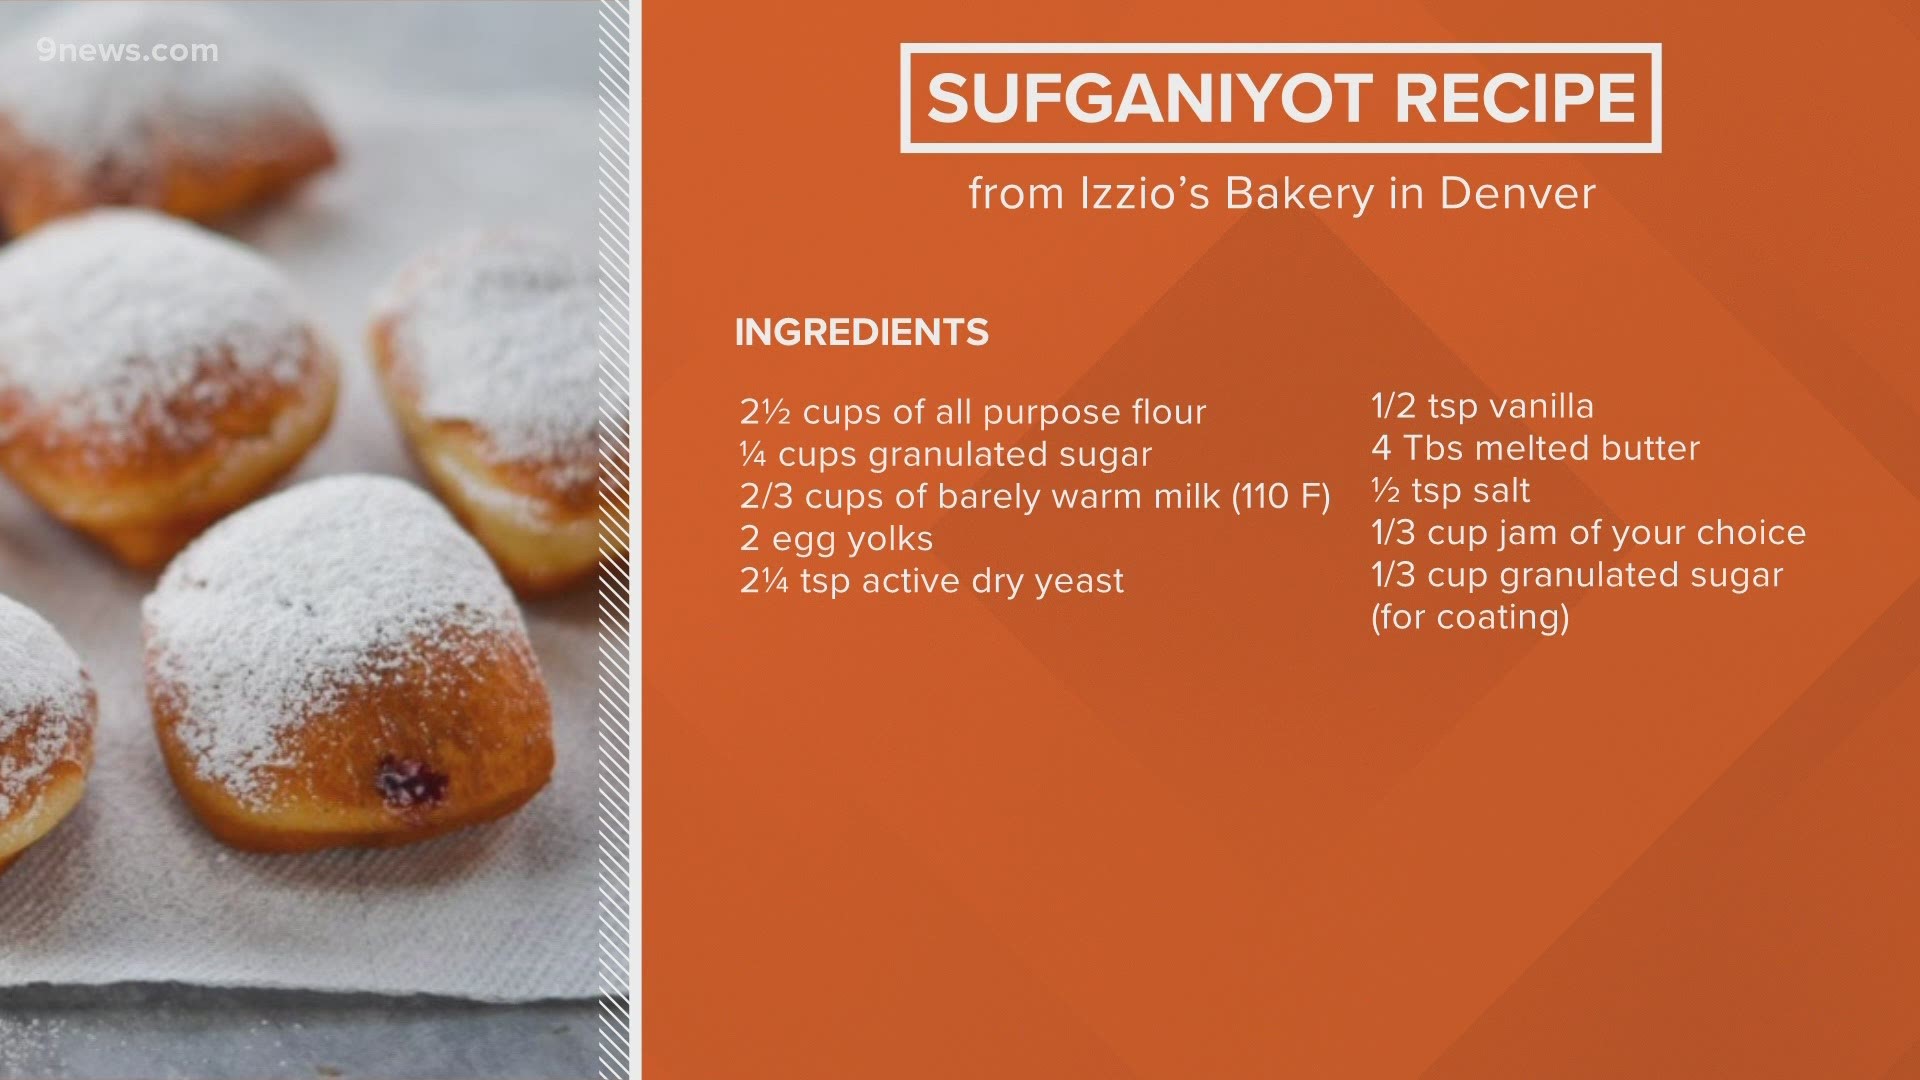 Izzio Bakery shares a Hanukah treat with its recipe for sufganiyot, or Israeli doughnuts.